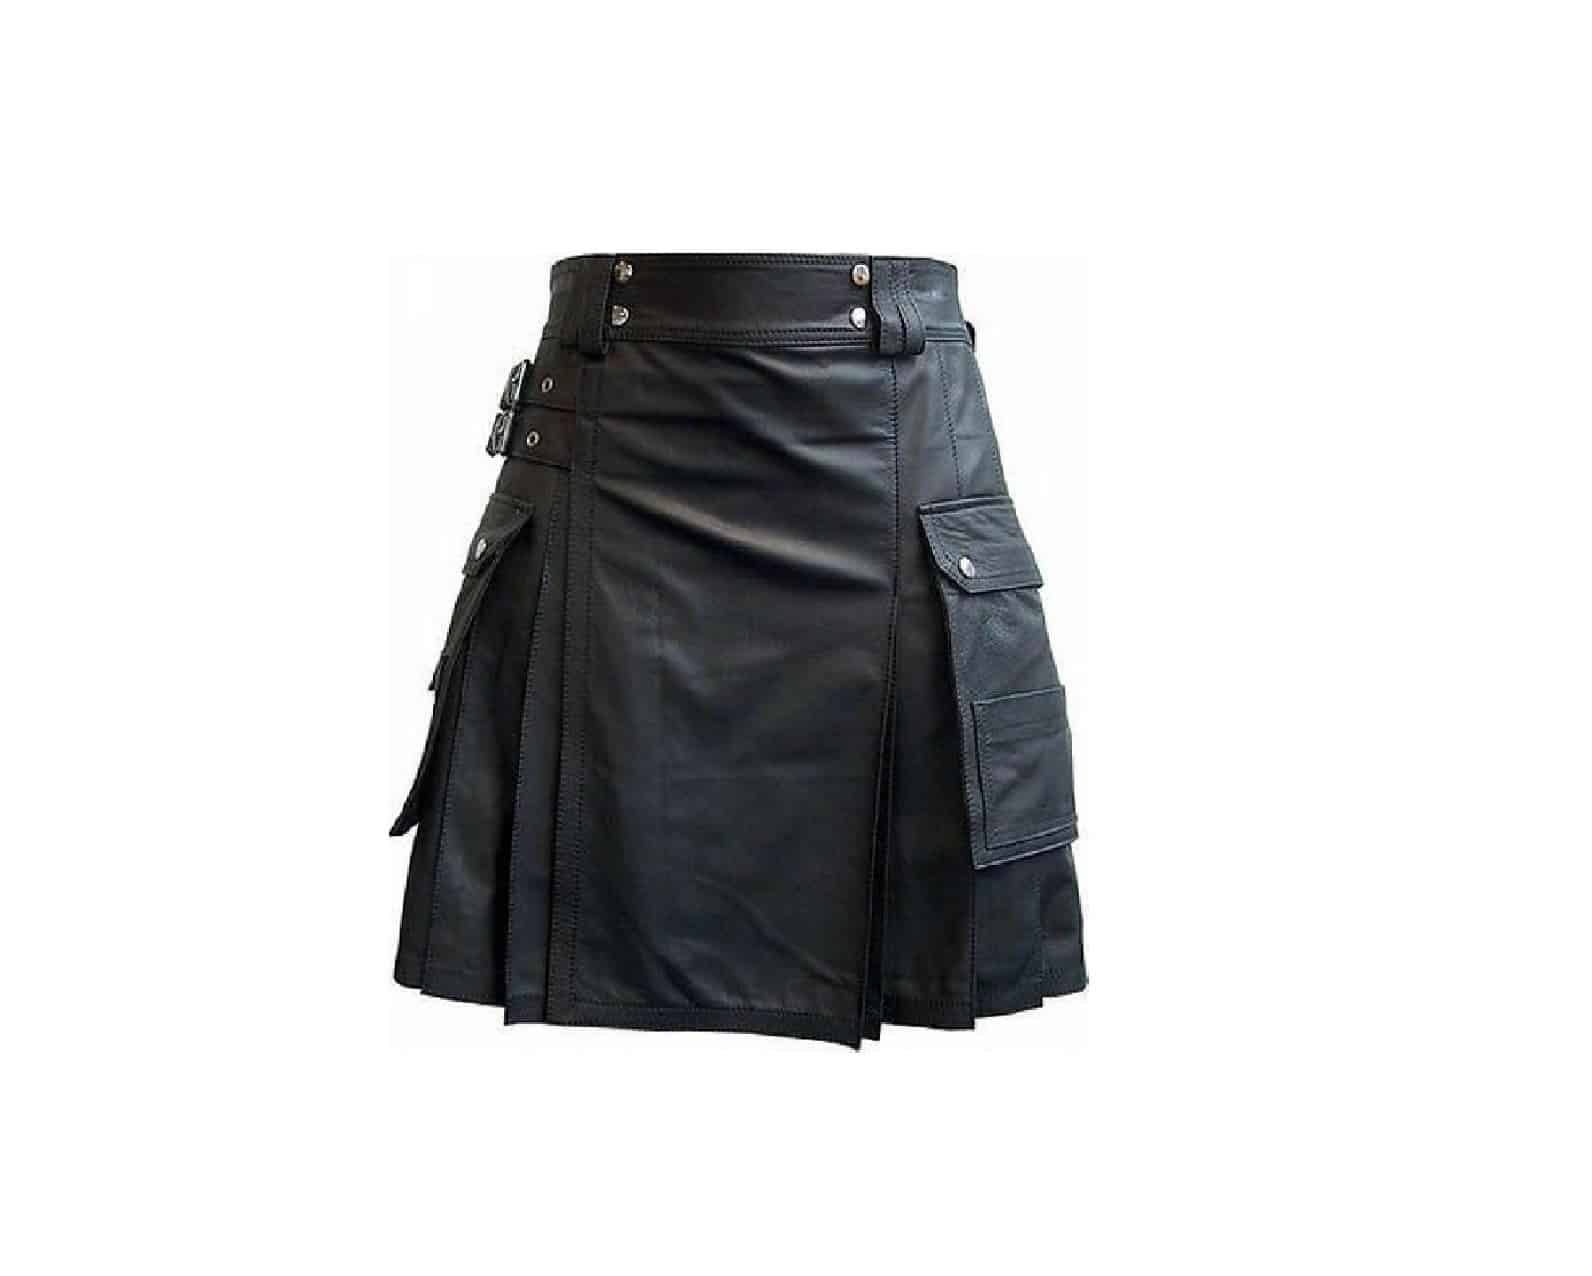 Mens Black Casual Kilt | Leather Kilts For Sale Nov 2020 - Rocketkilts